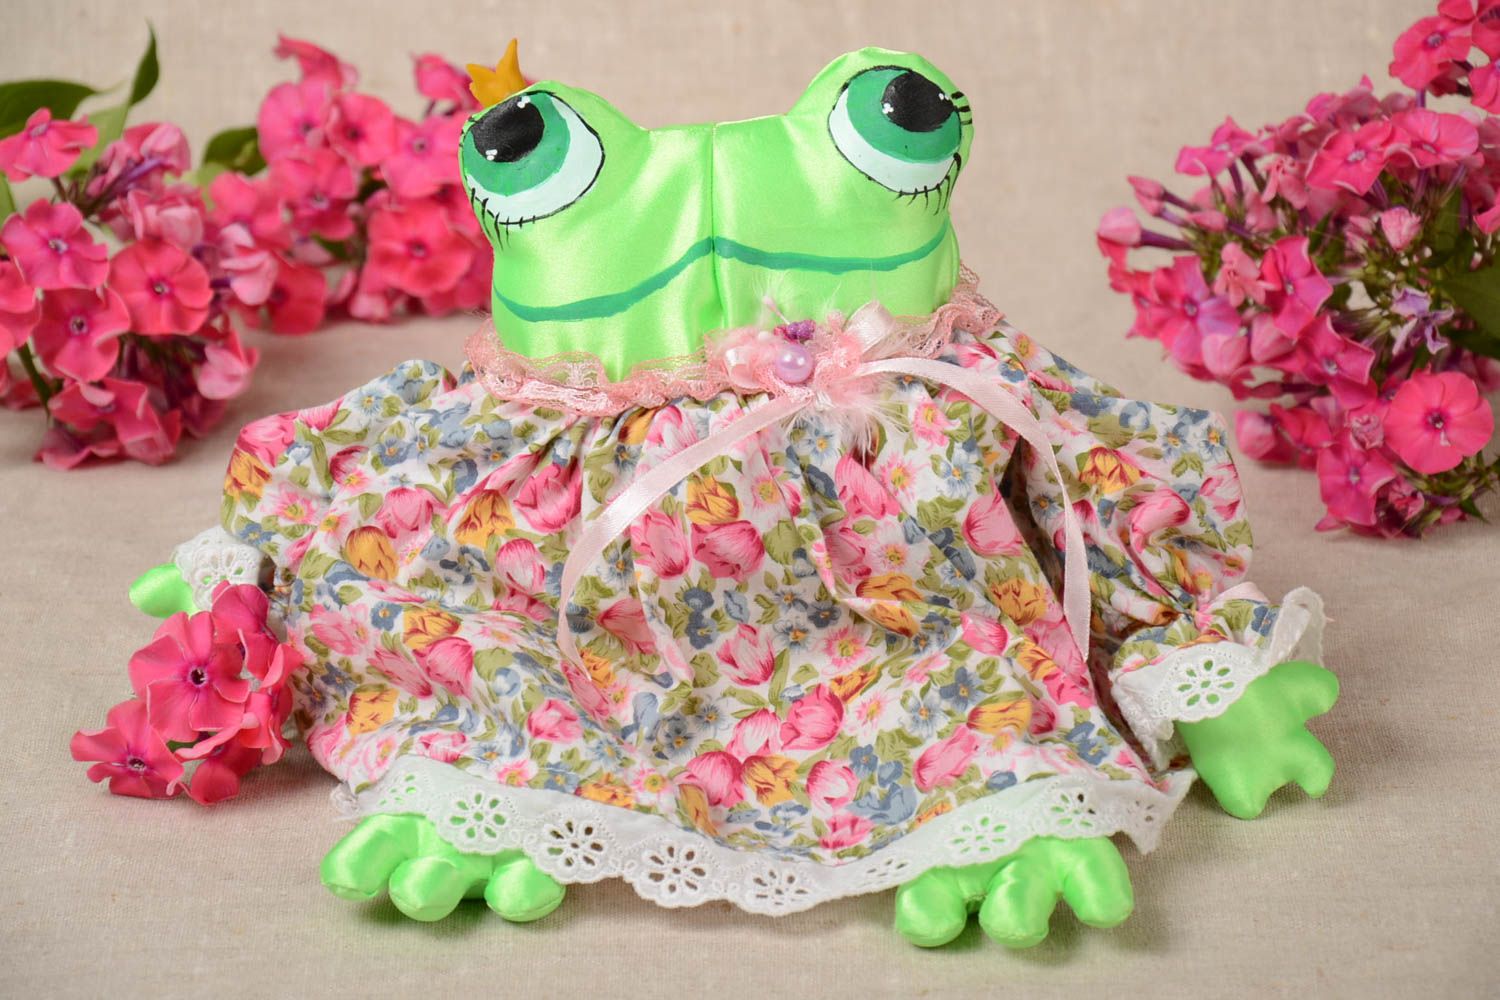 Unusual handmade fabric soft toy decorative stuffed toy home design ideas photo 1